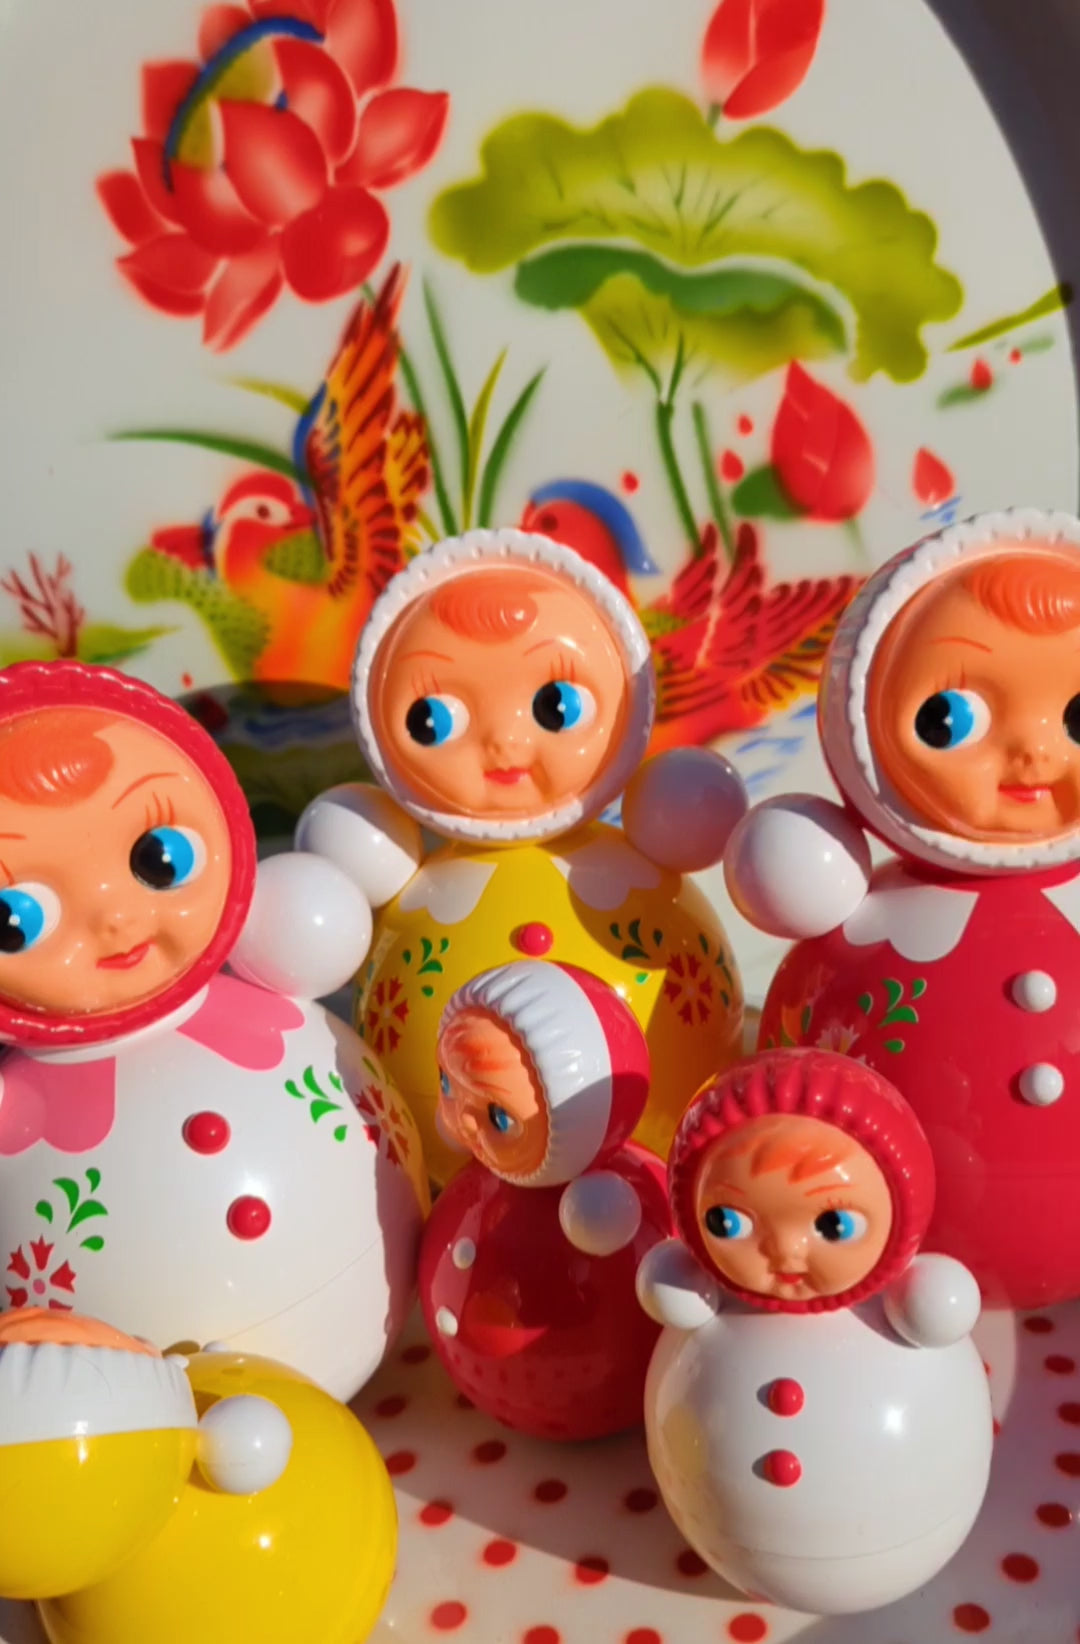 Russian tink tonk dolls